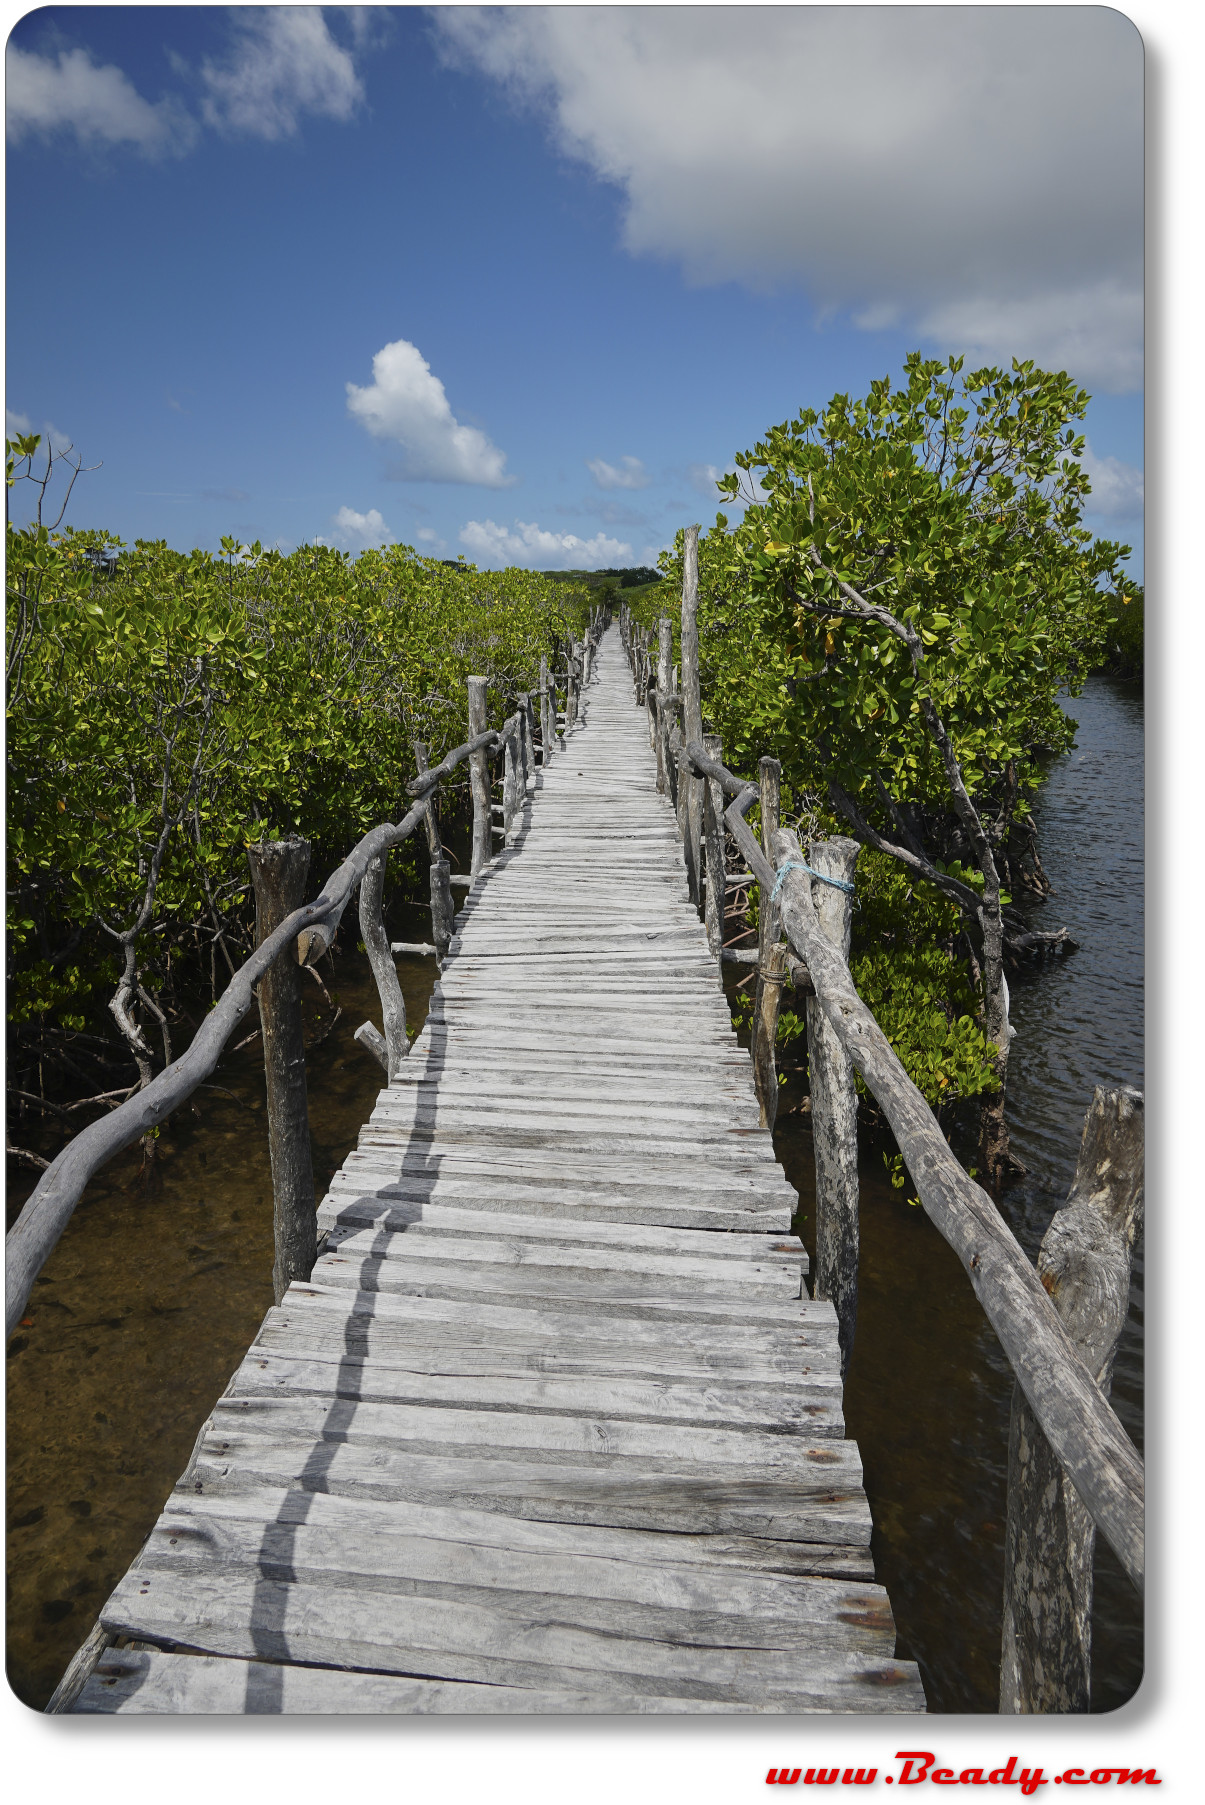 the boardwalk across the mangrove swamps of Lamu